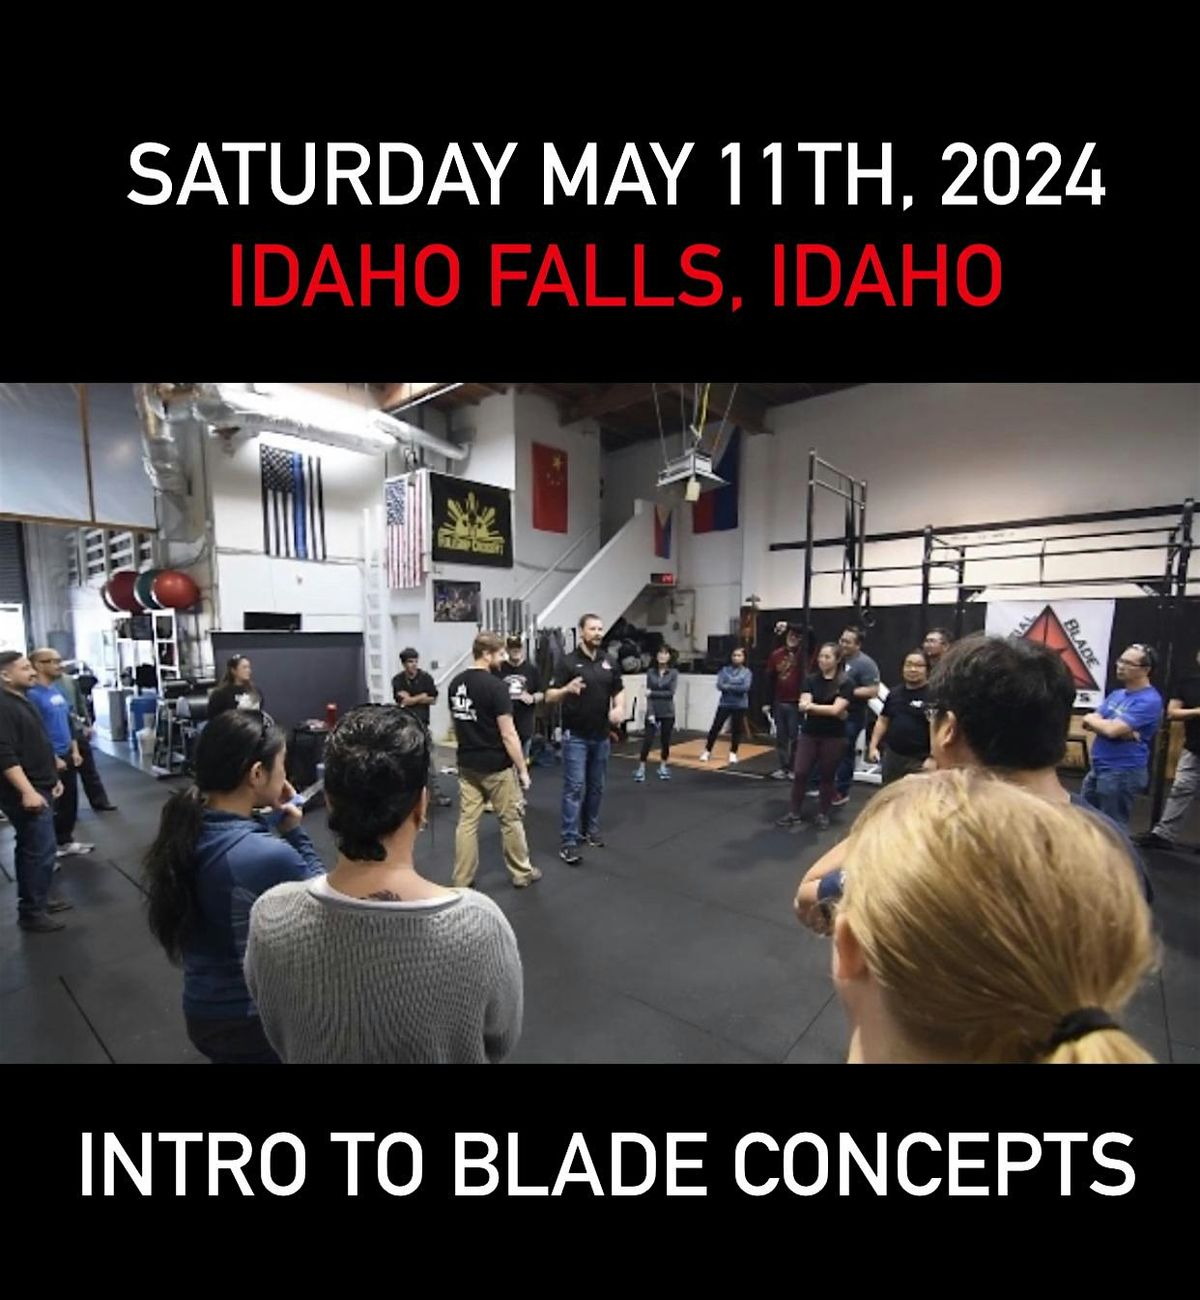 Into to Blade Concepts for Self Defense IDAHO FALLS